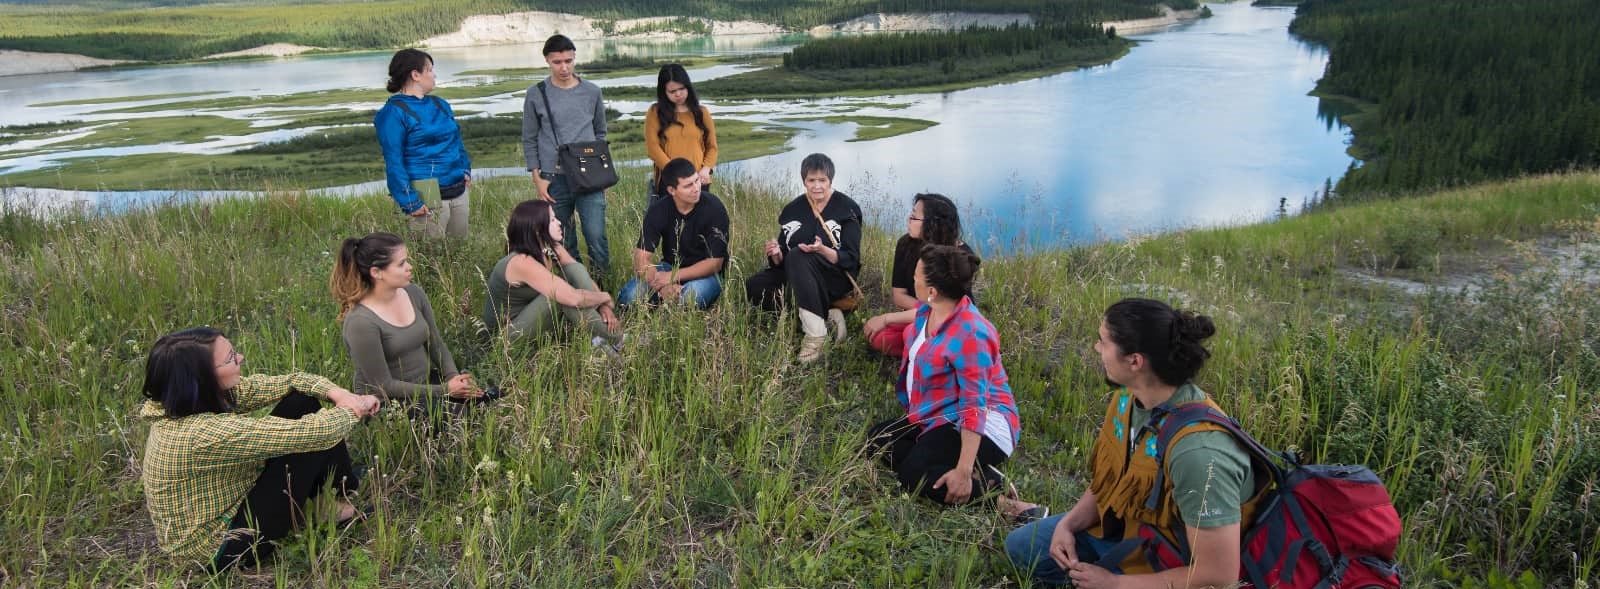 Students with Elder overlooking Yukon River